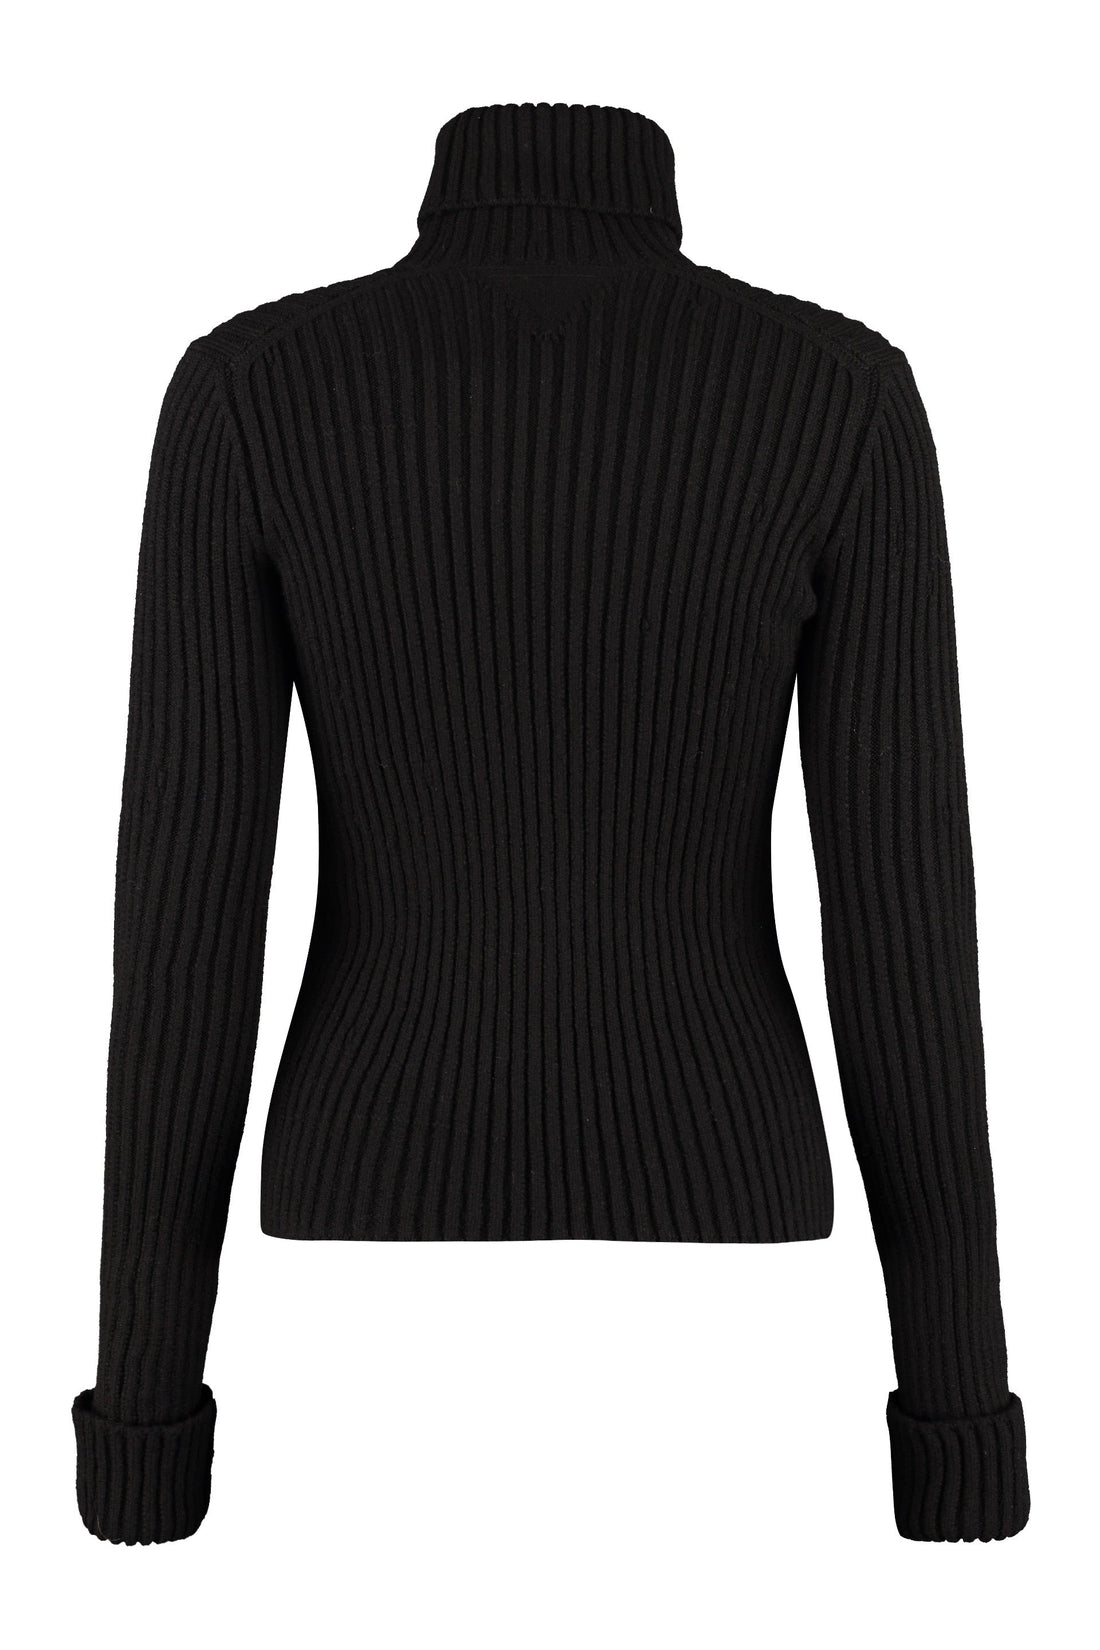 Bottega Veneta-OUTLET-SALE-Ribbed turtleneck sweater-ARCHIVIST